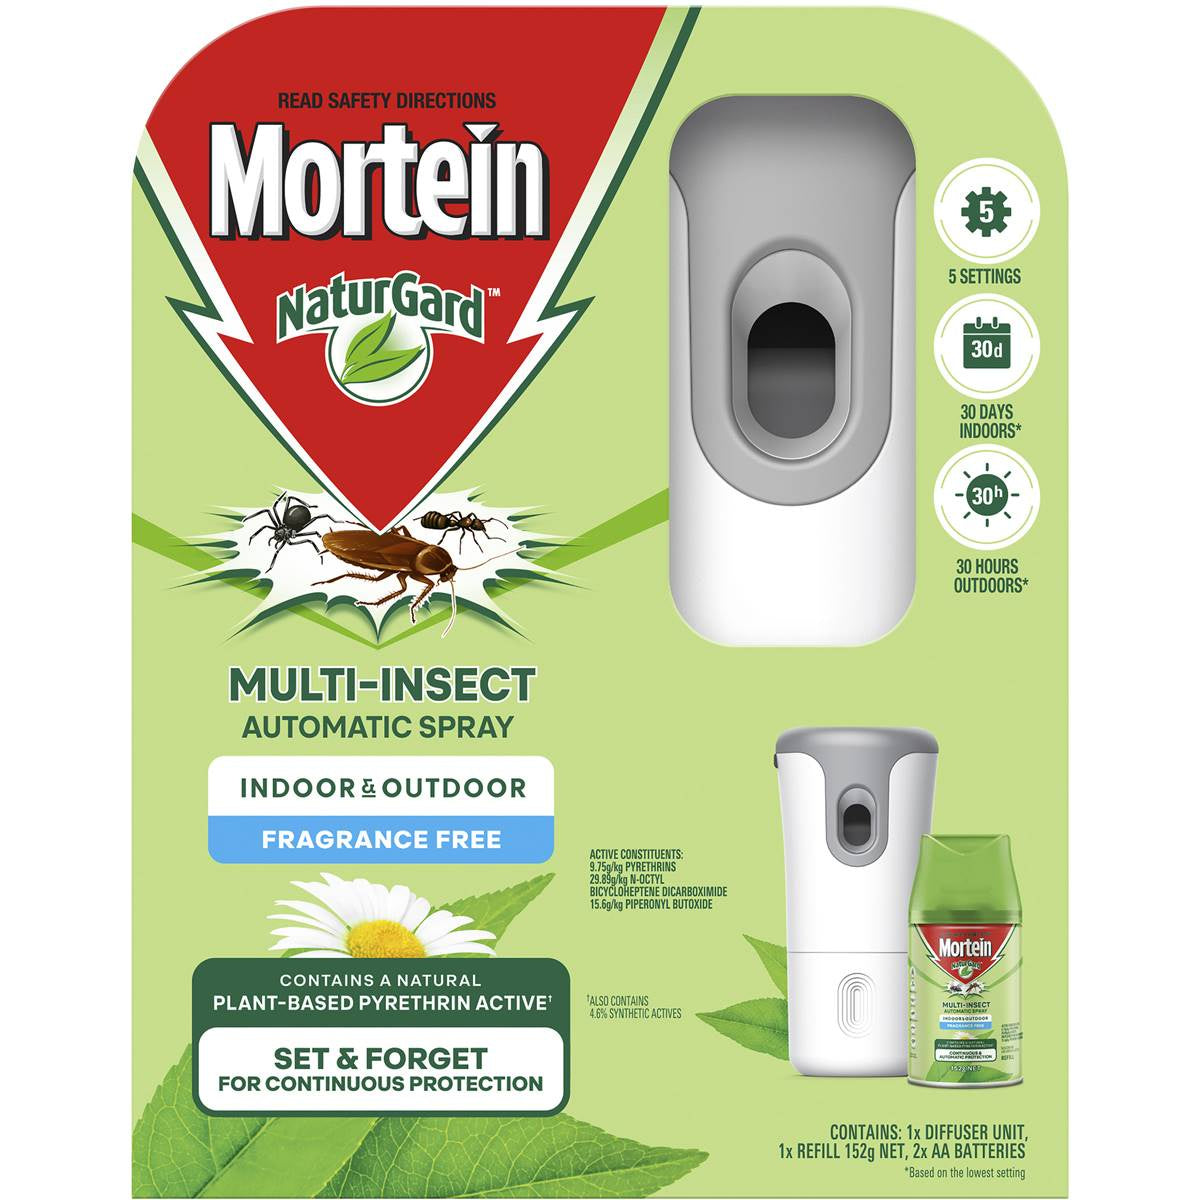 Mortein NaturGard multi-insect automatic spray